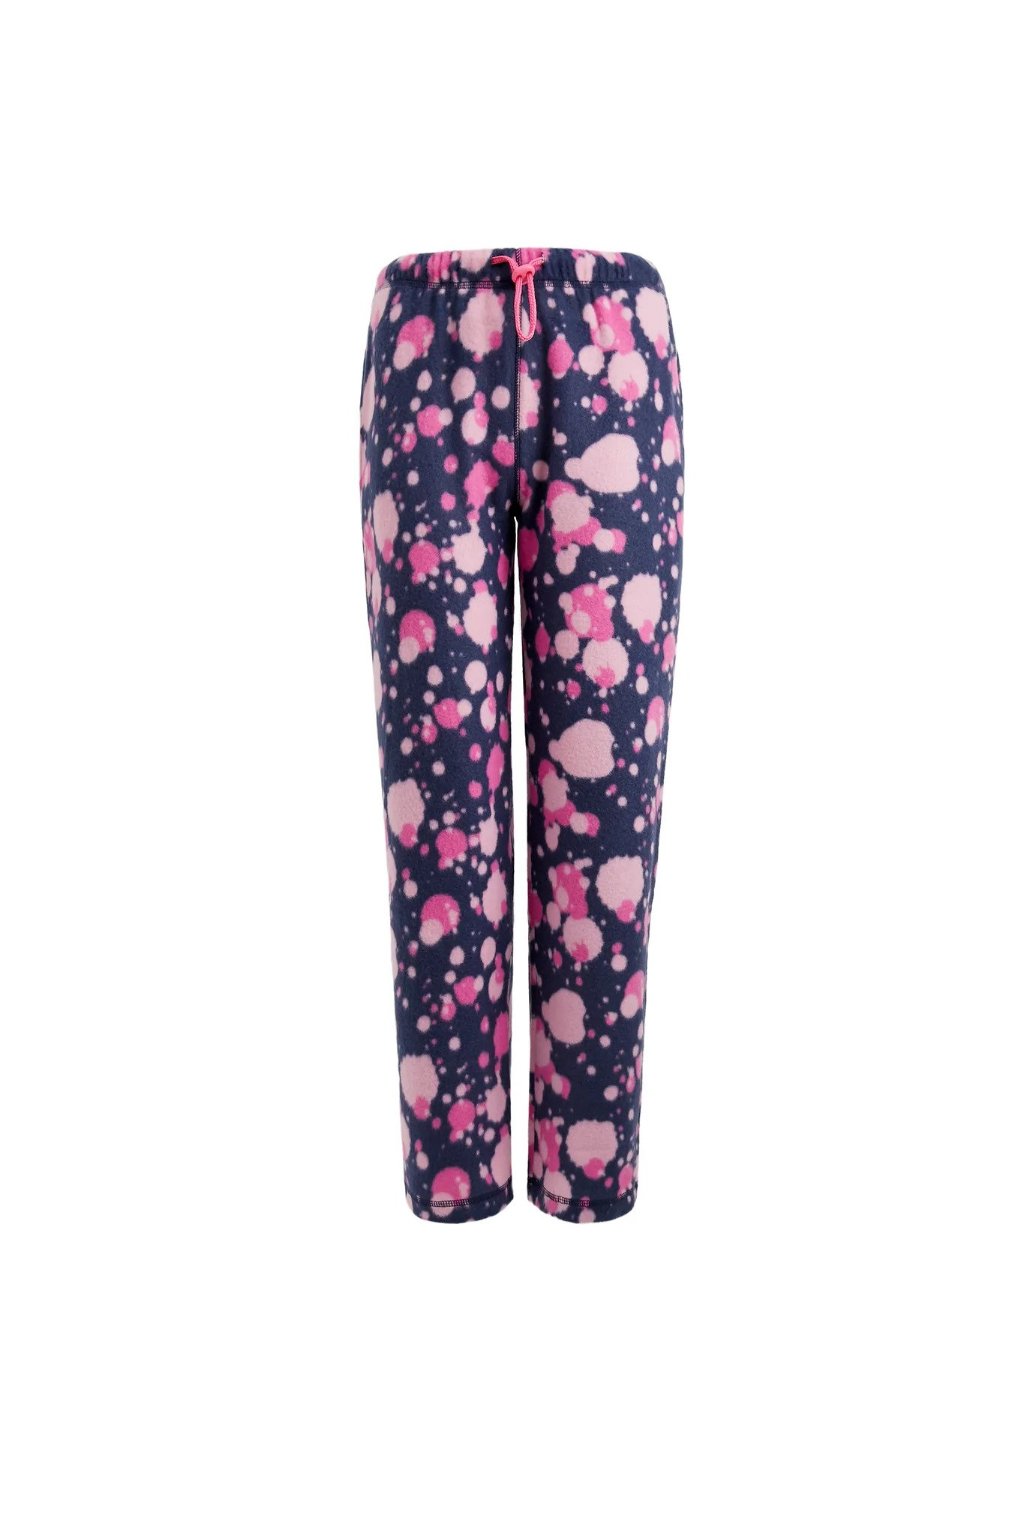 Wholesale Women's Fleece Pajama Pants, 3X-5X, Pink/Navy Abstract